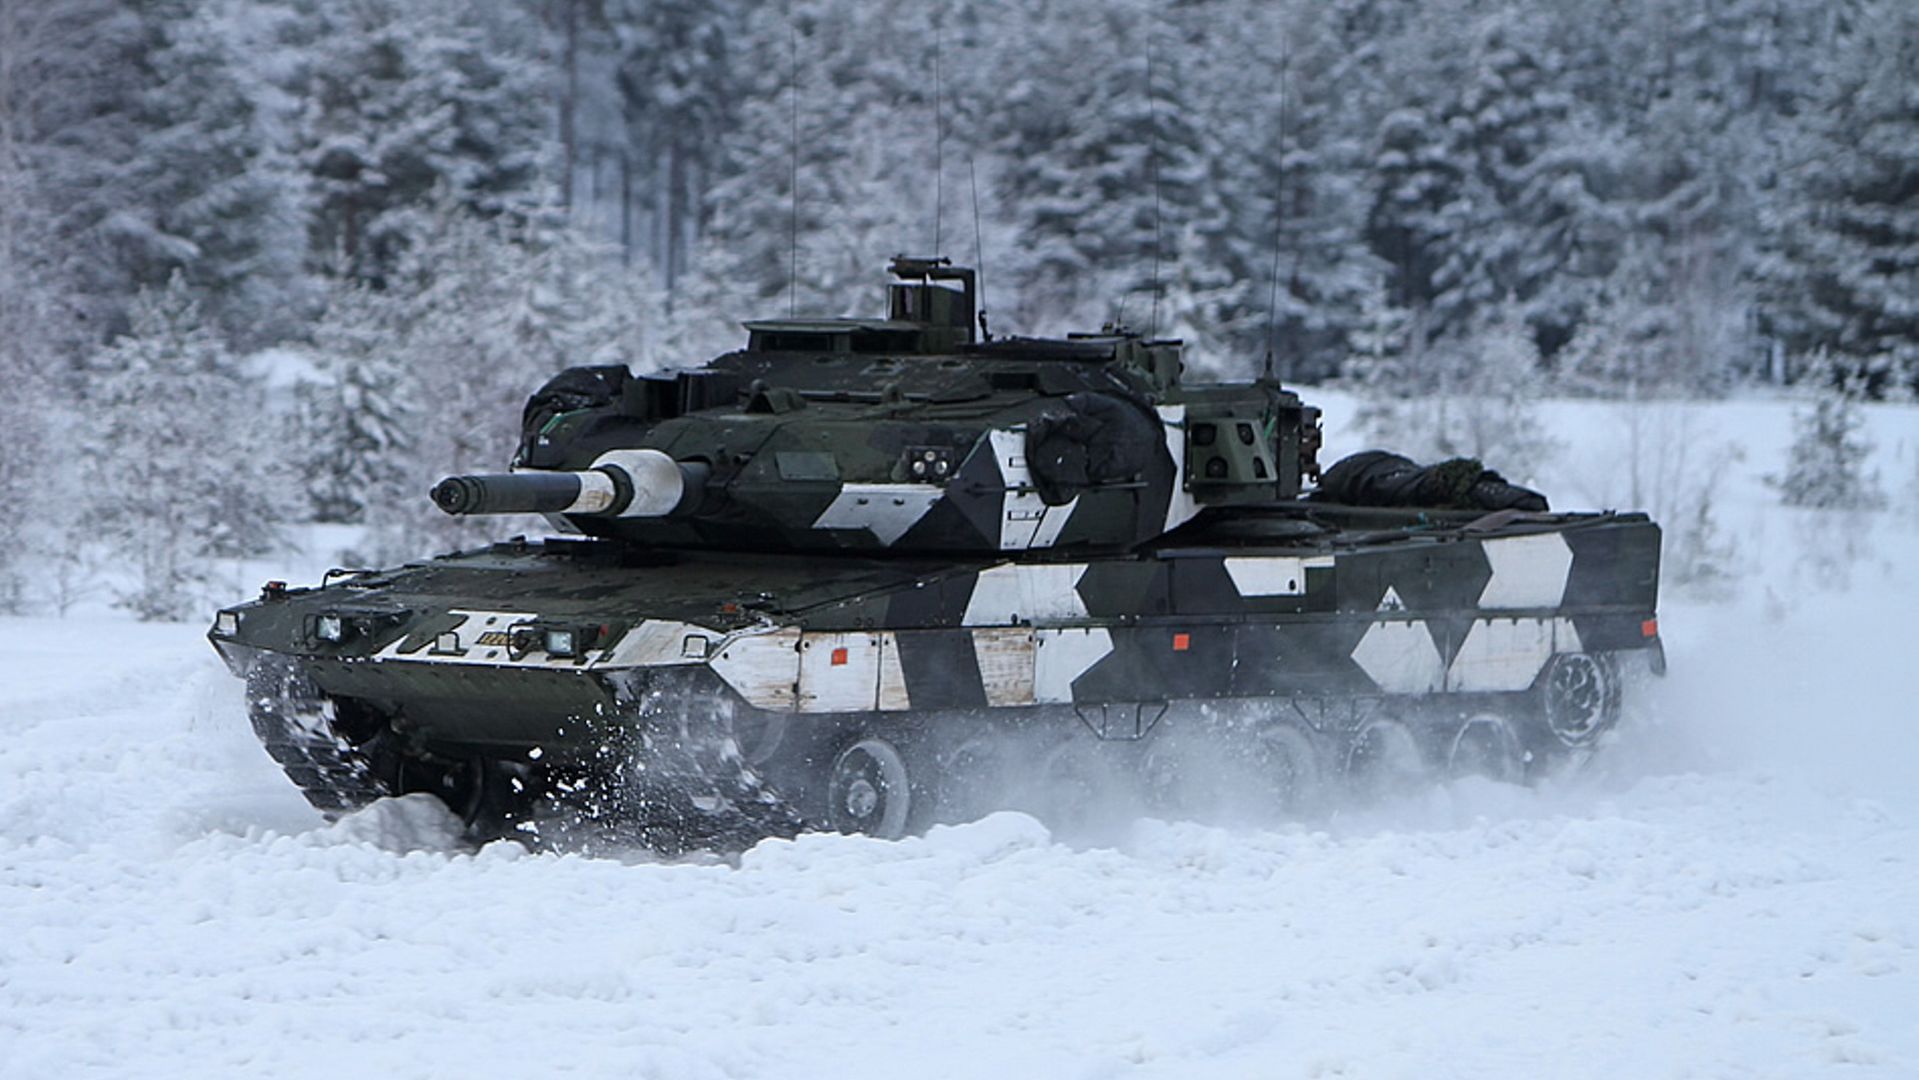 Stridsvagn 122 - stridsvagn 122 - dev.abcdef.wiki